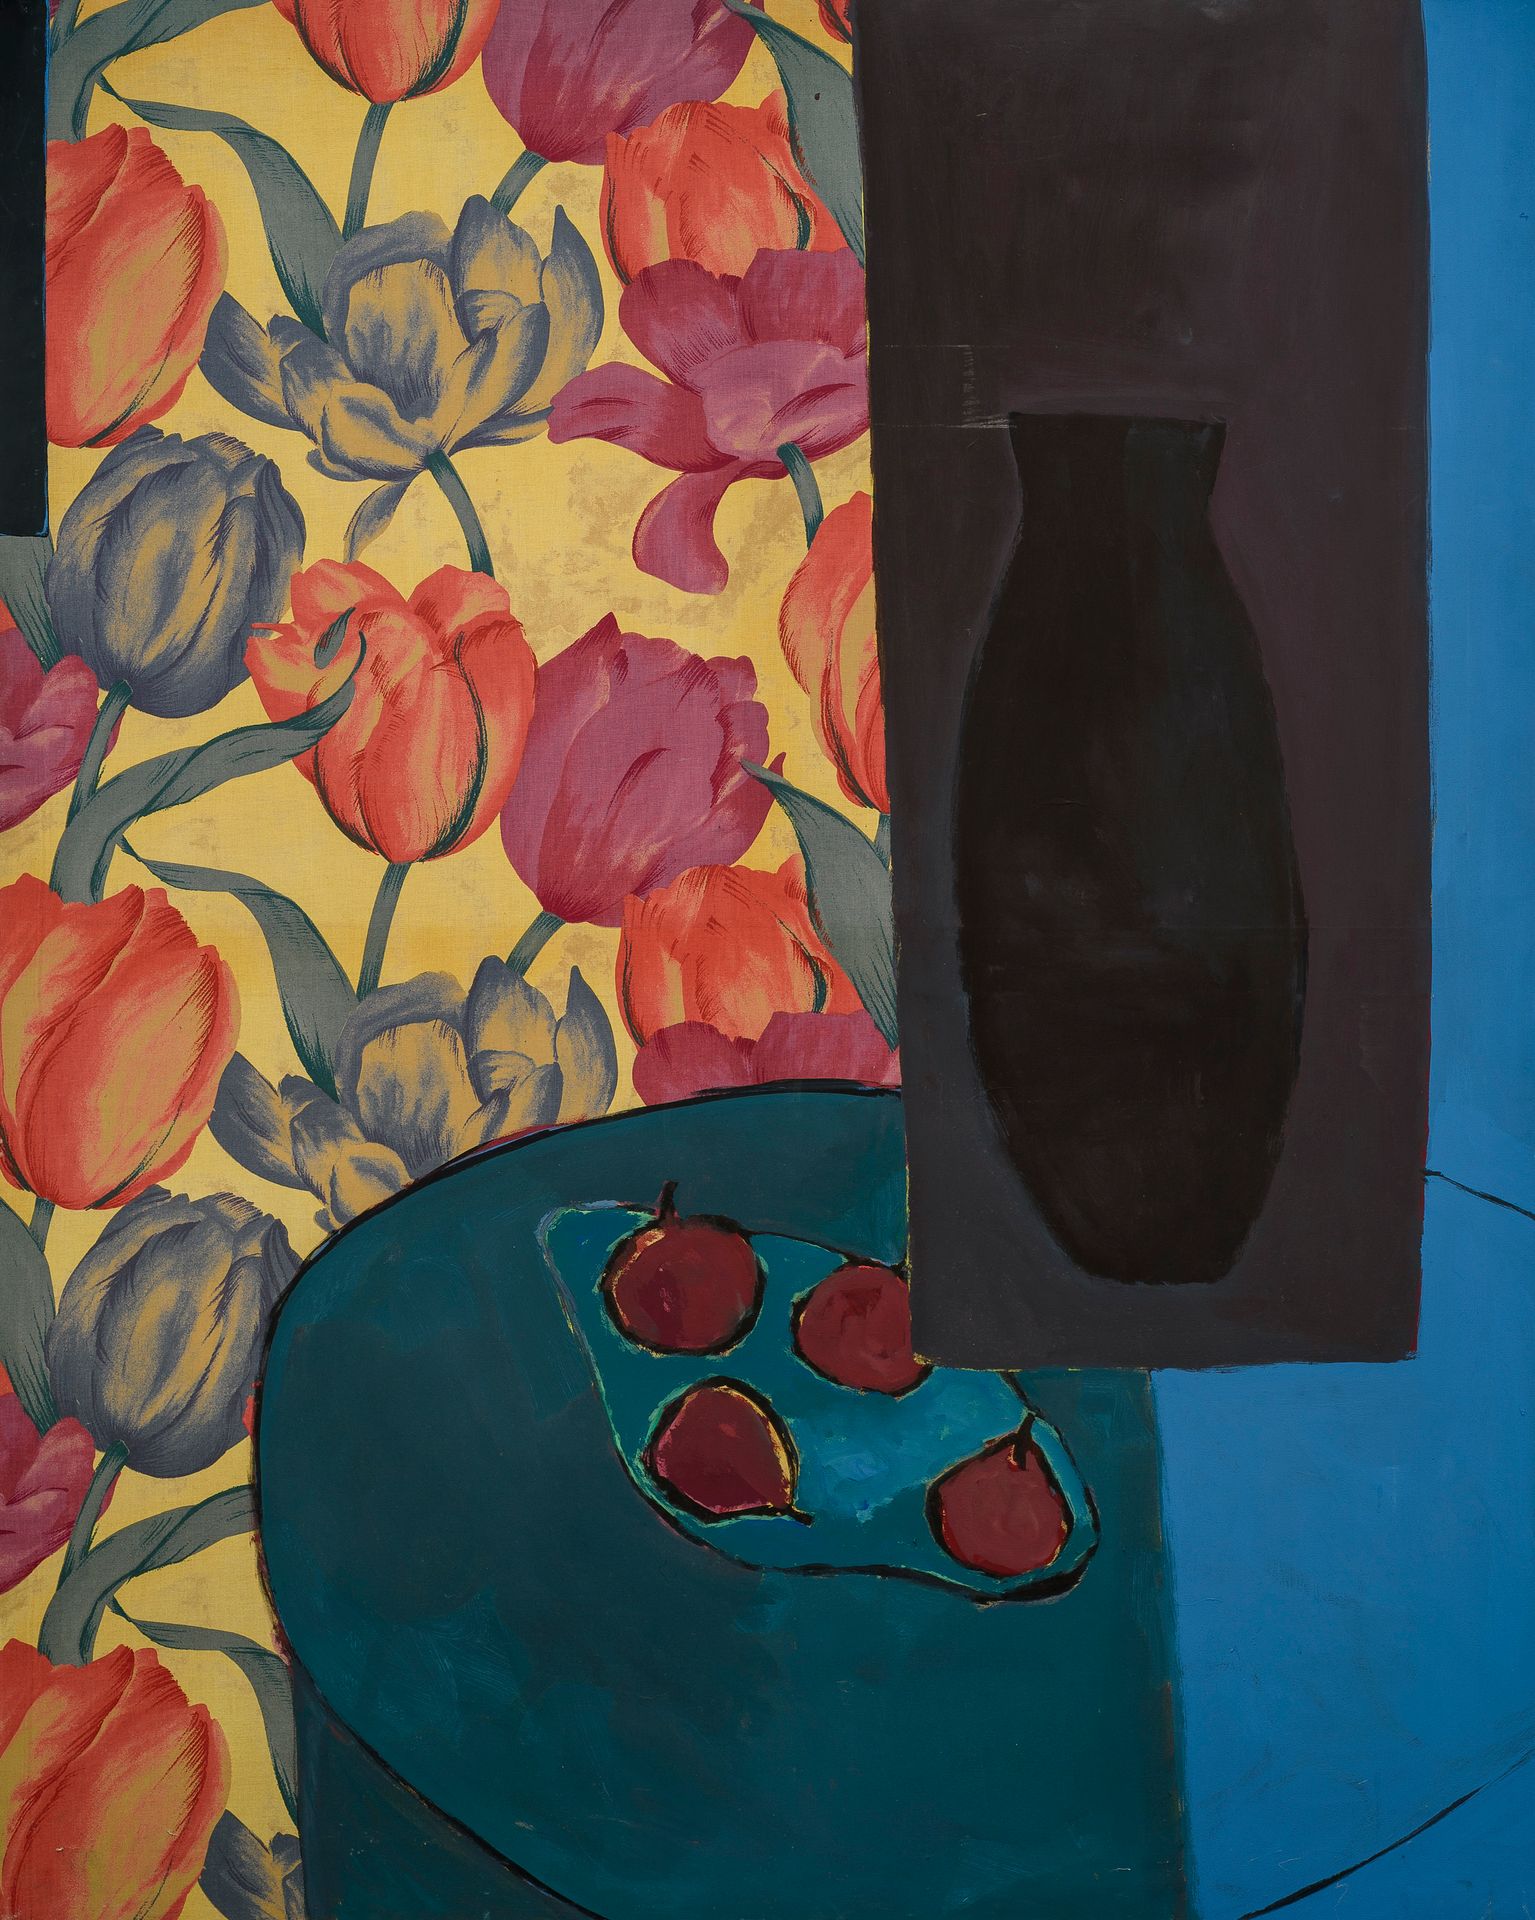 Null 杰奎琳-盖农 (生于1951年)

静物，1993年

印花布上的丙烯颜料

160 x 130 cm